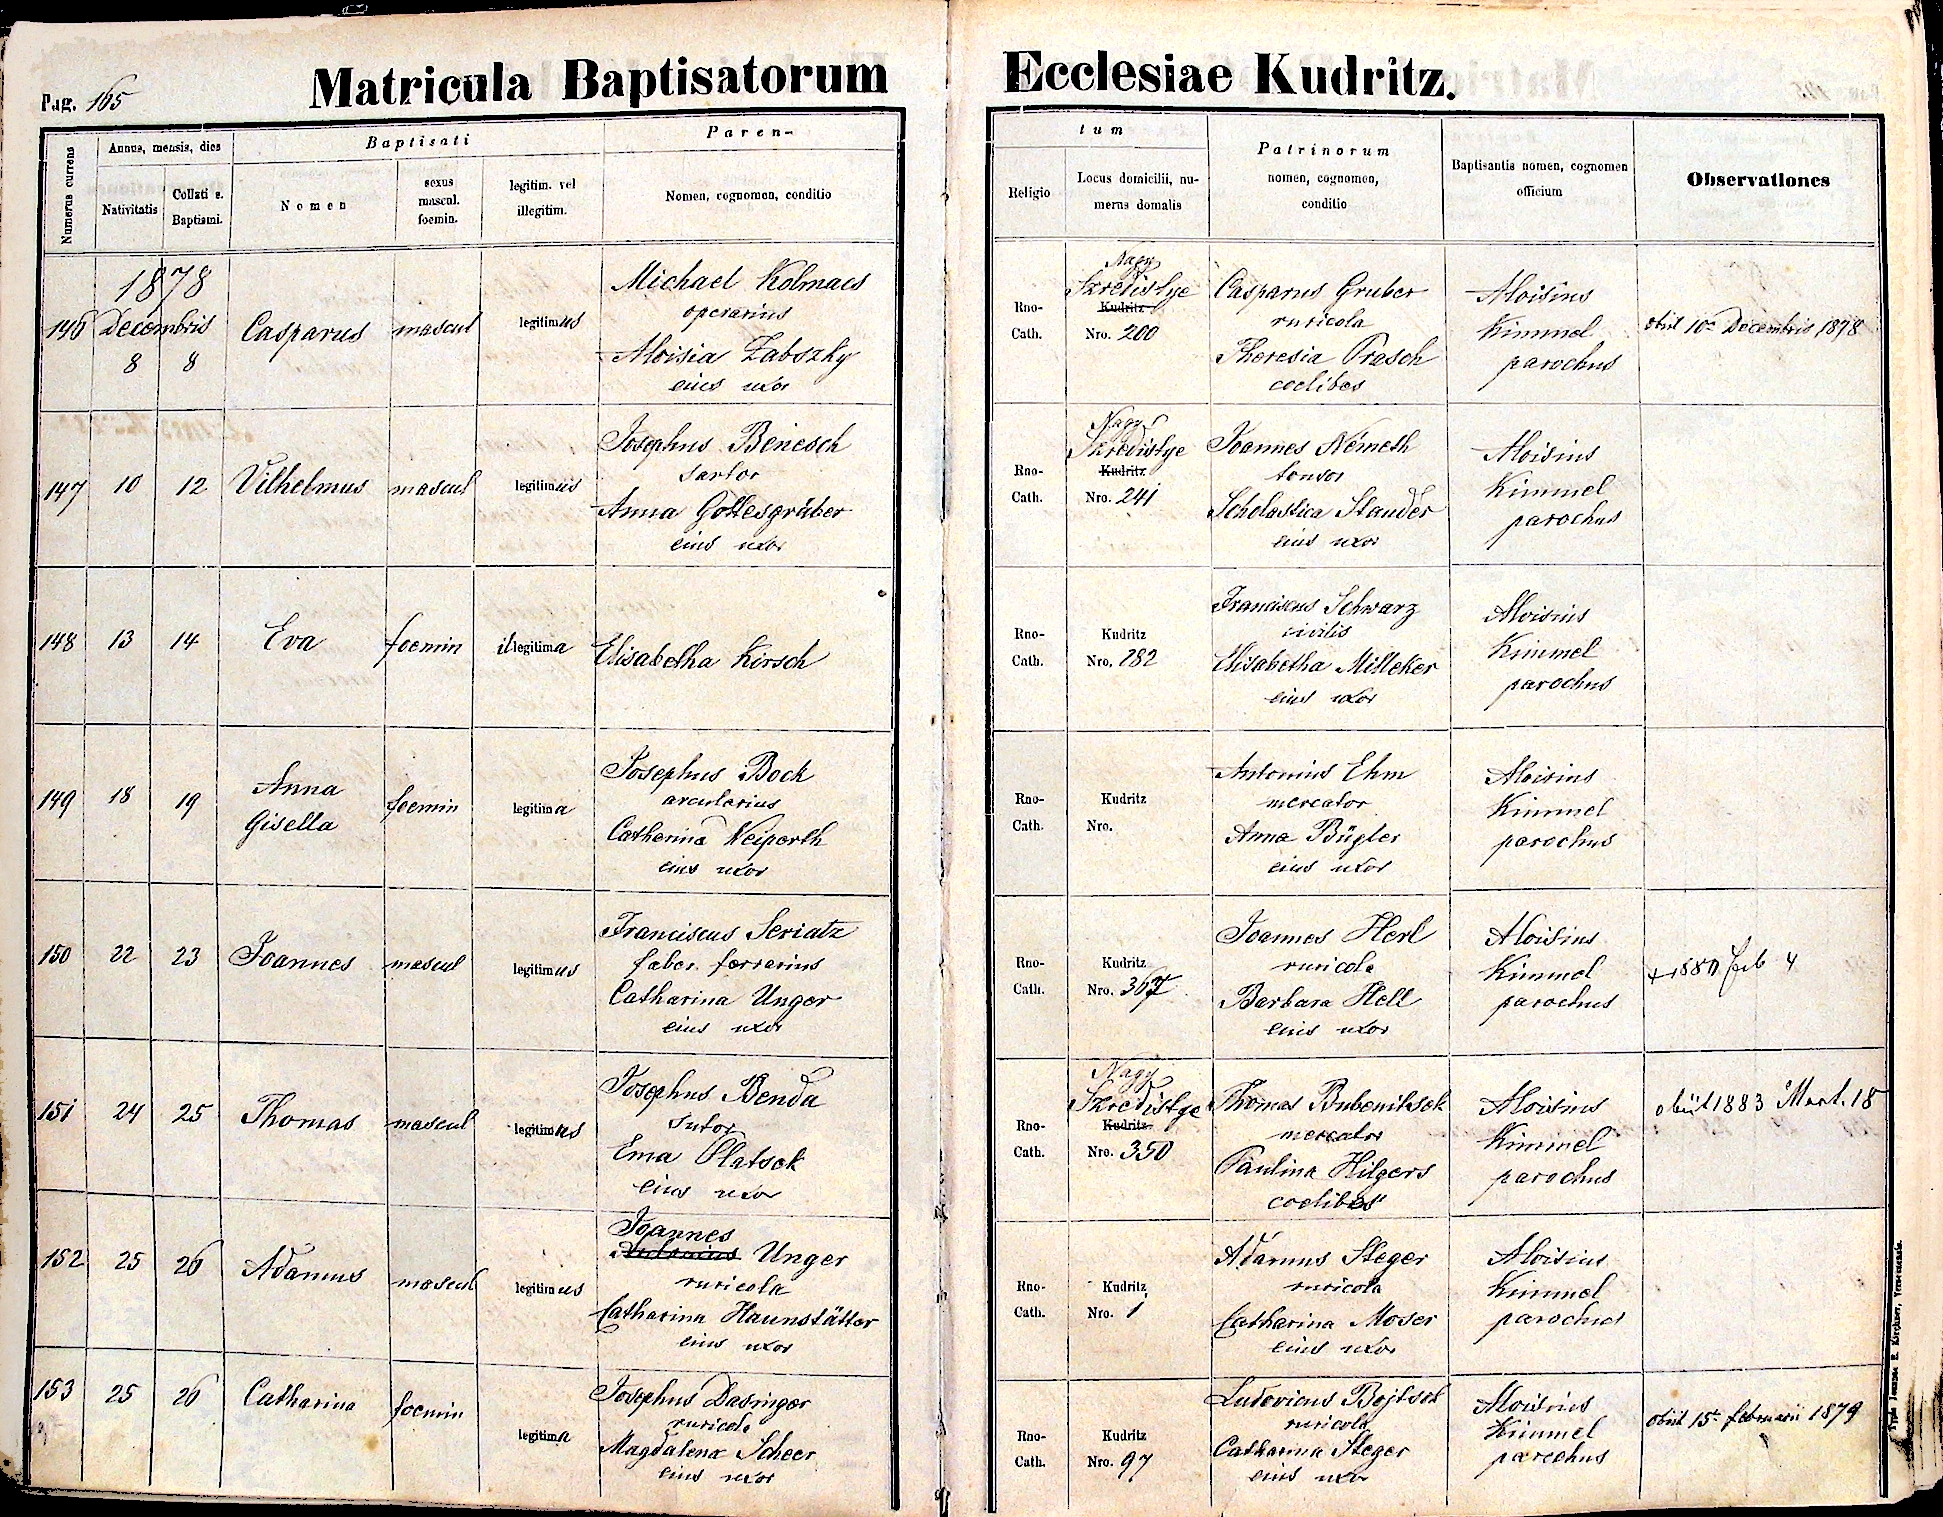 images/church_records/BIRTHS/1870-1879B/1878/165